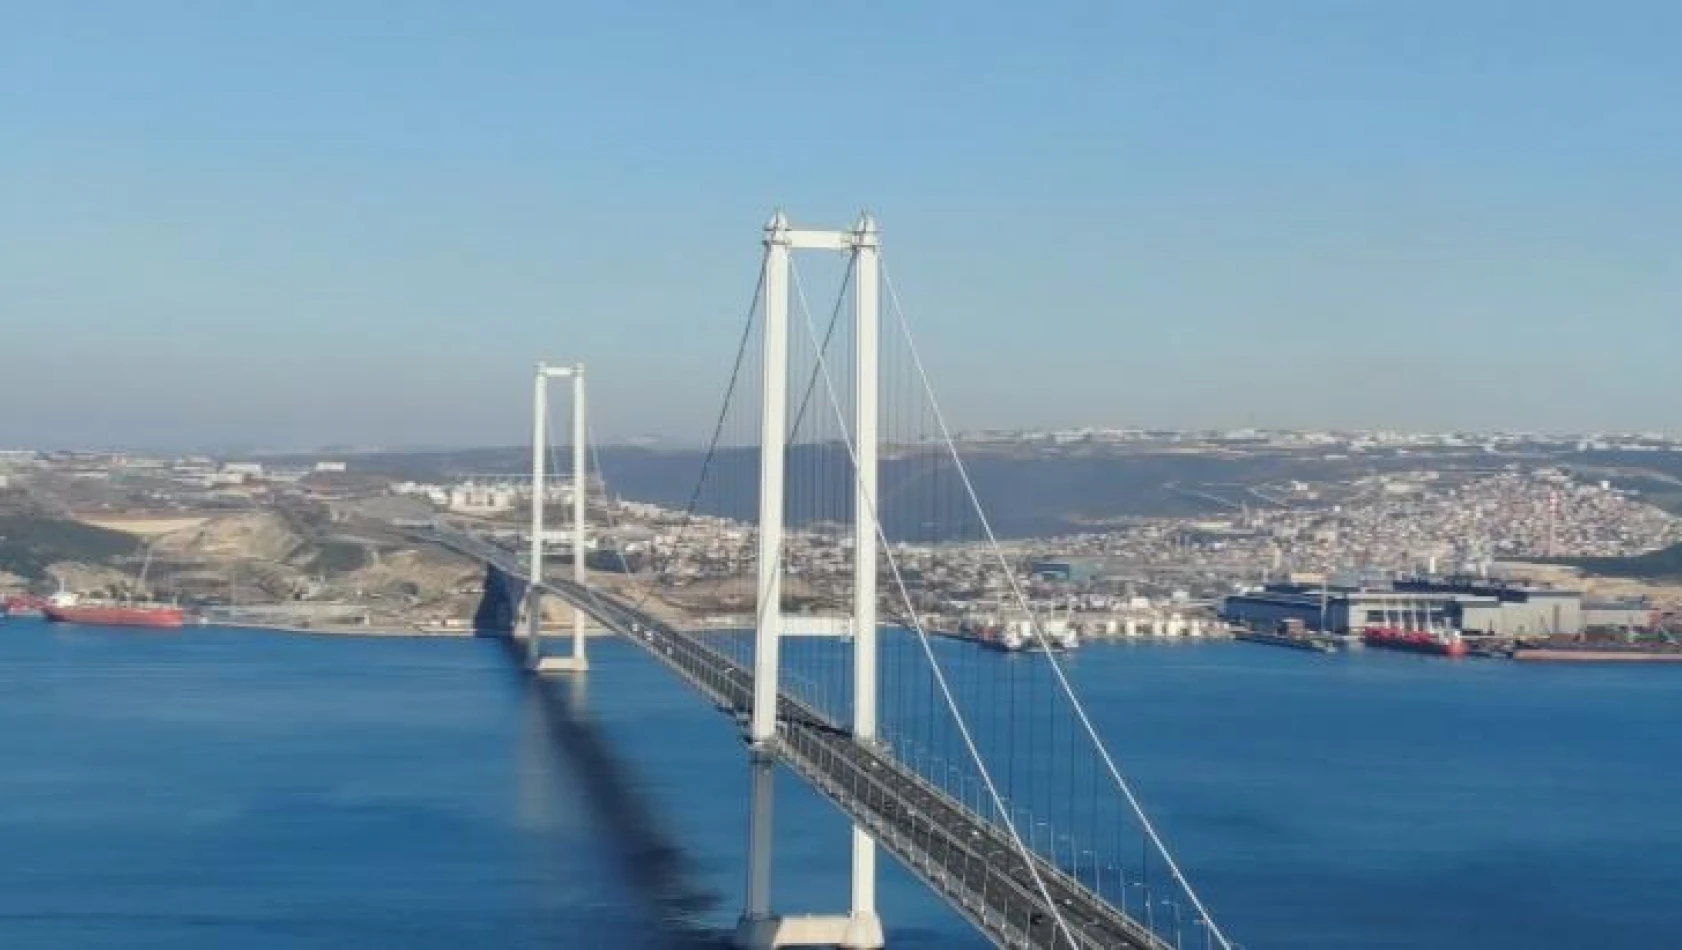 AK Partili Akyol: 'Osman Gazi Köprüsü ile insanımızın konforu arttı'